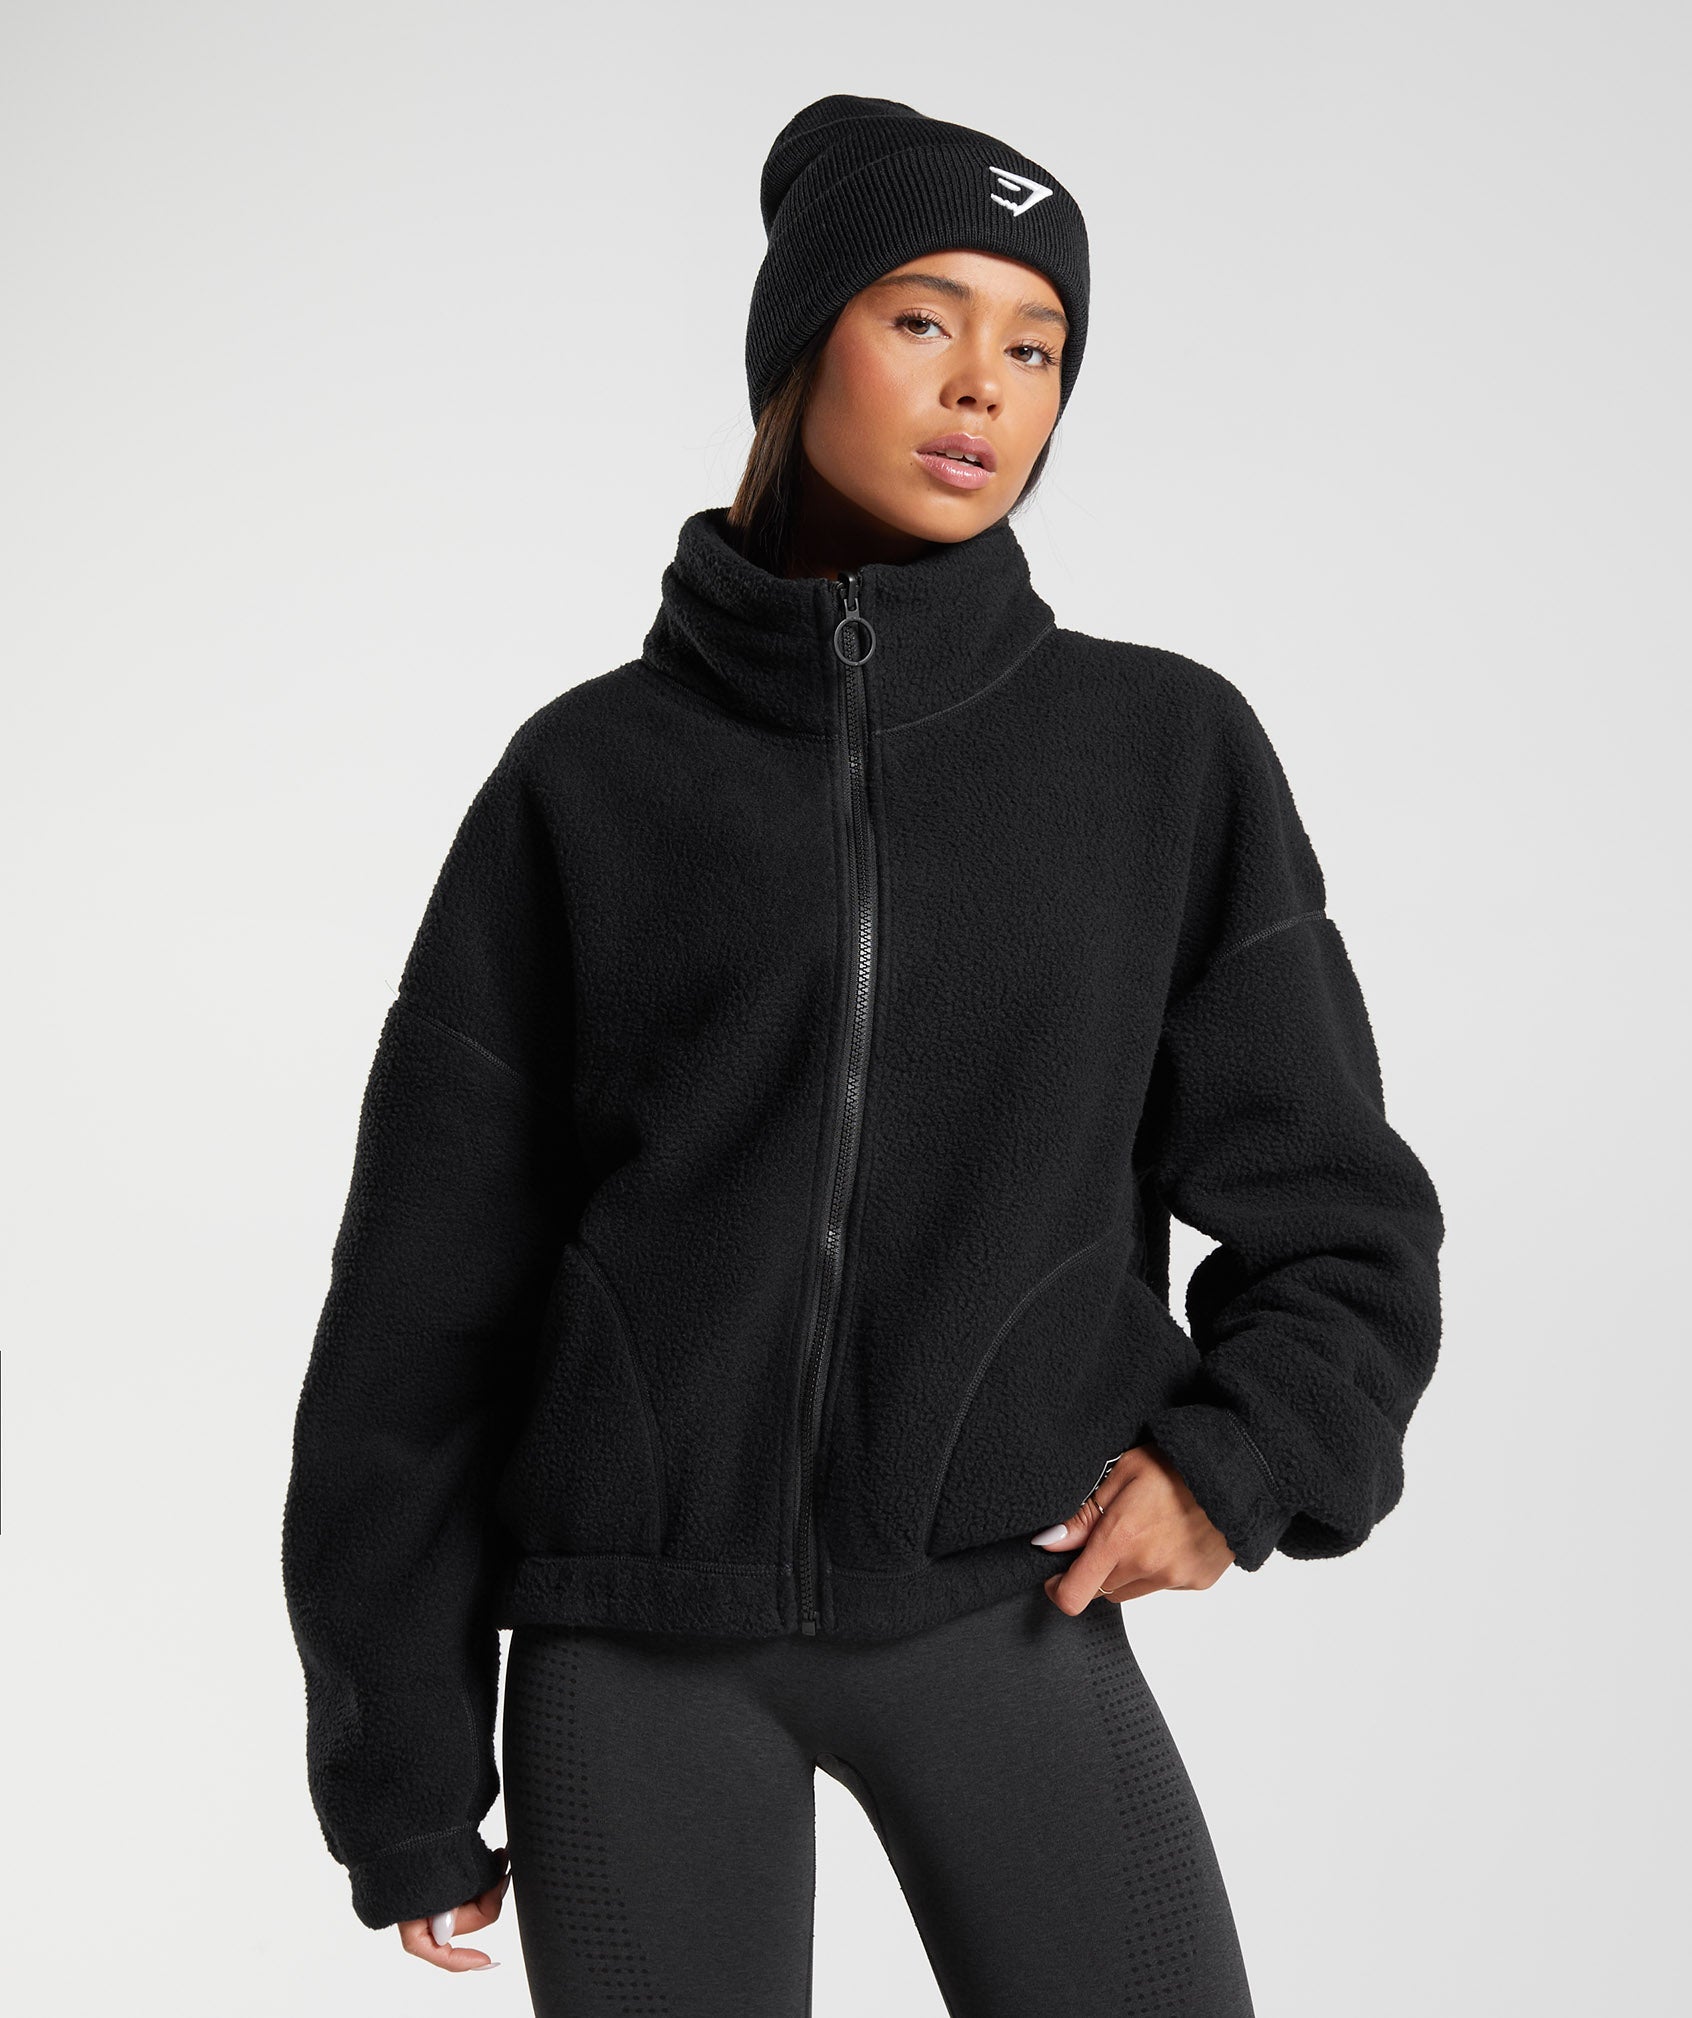 Gymshark Women's Illumination Jacket (Size XS) Black Full Zip Jacket - New